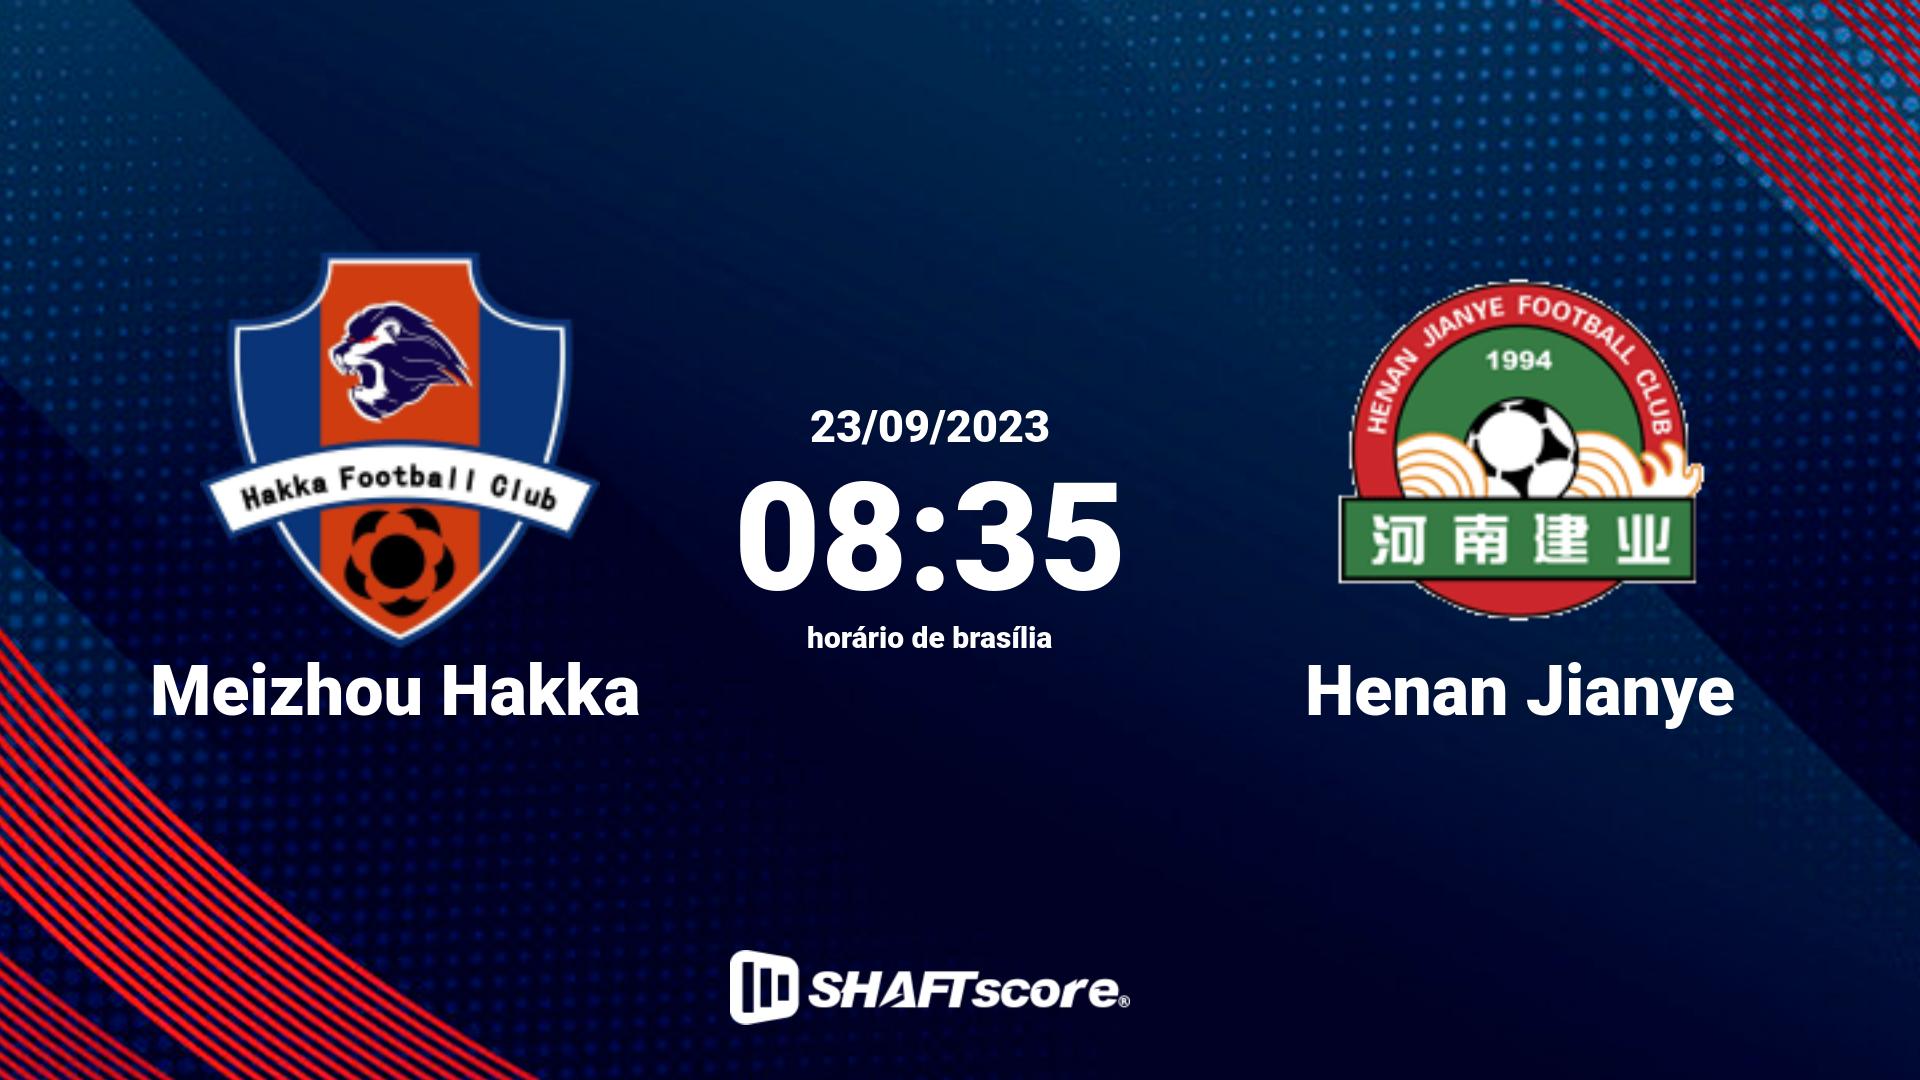 Estatísticas do jogo Meizhou Hakka vs Henan Jianye 23.09 08:35